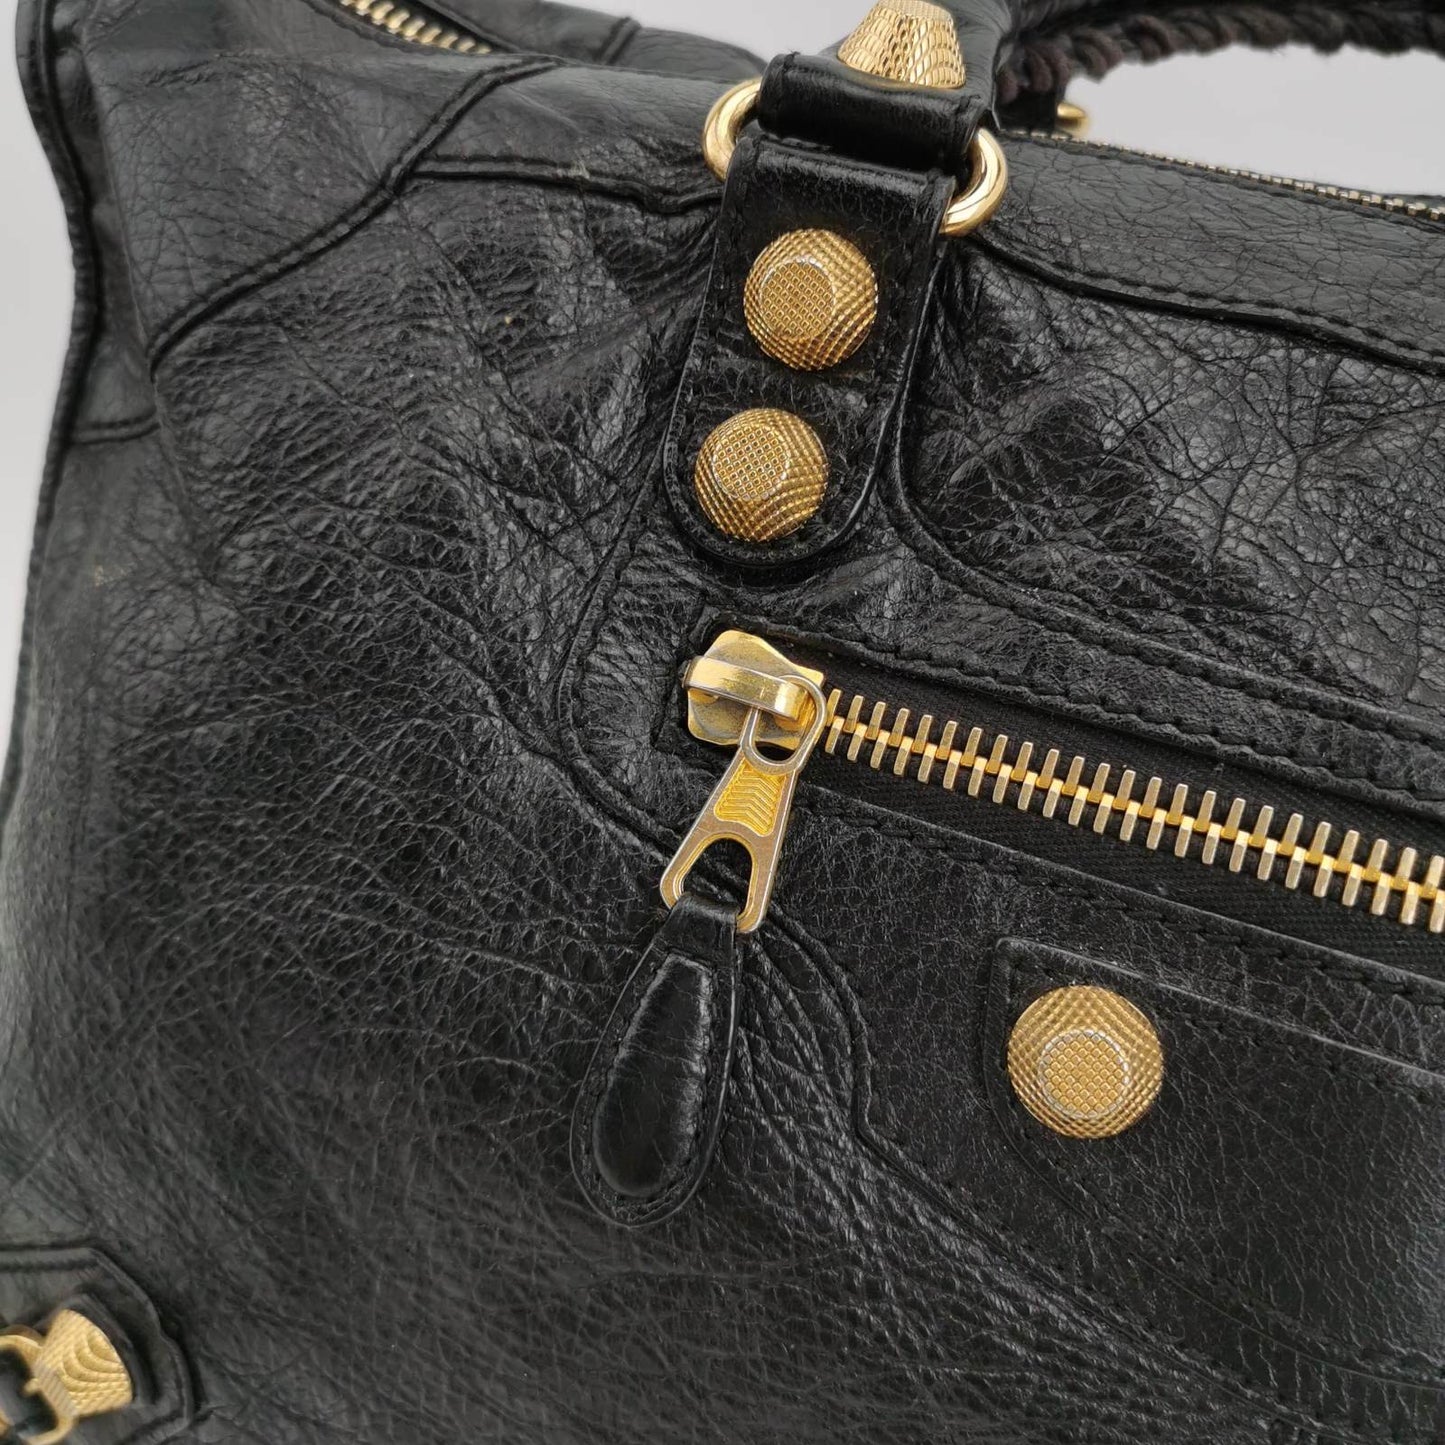 Balenciaga City Bag Black with Gold-tone hardware Large Handbag